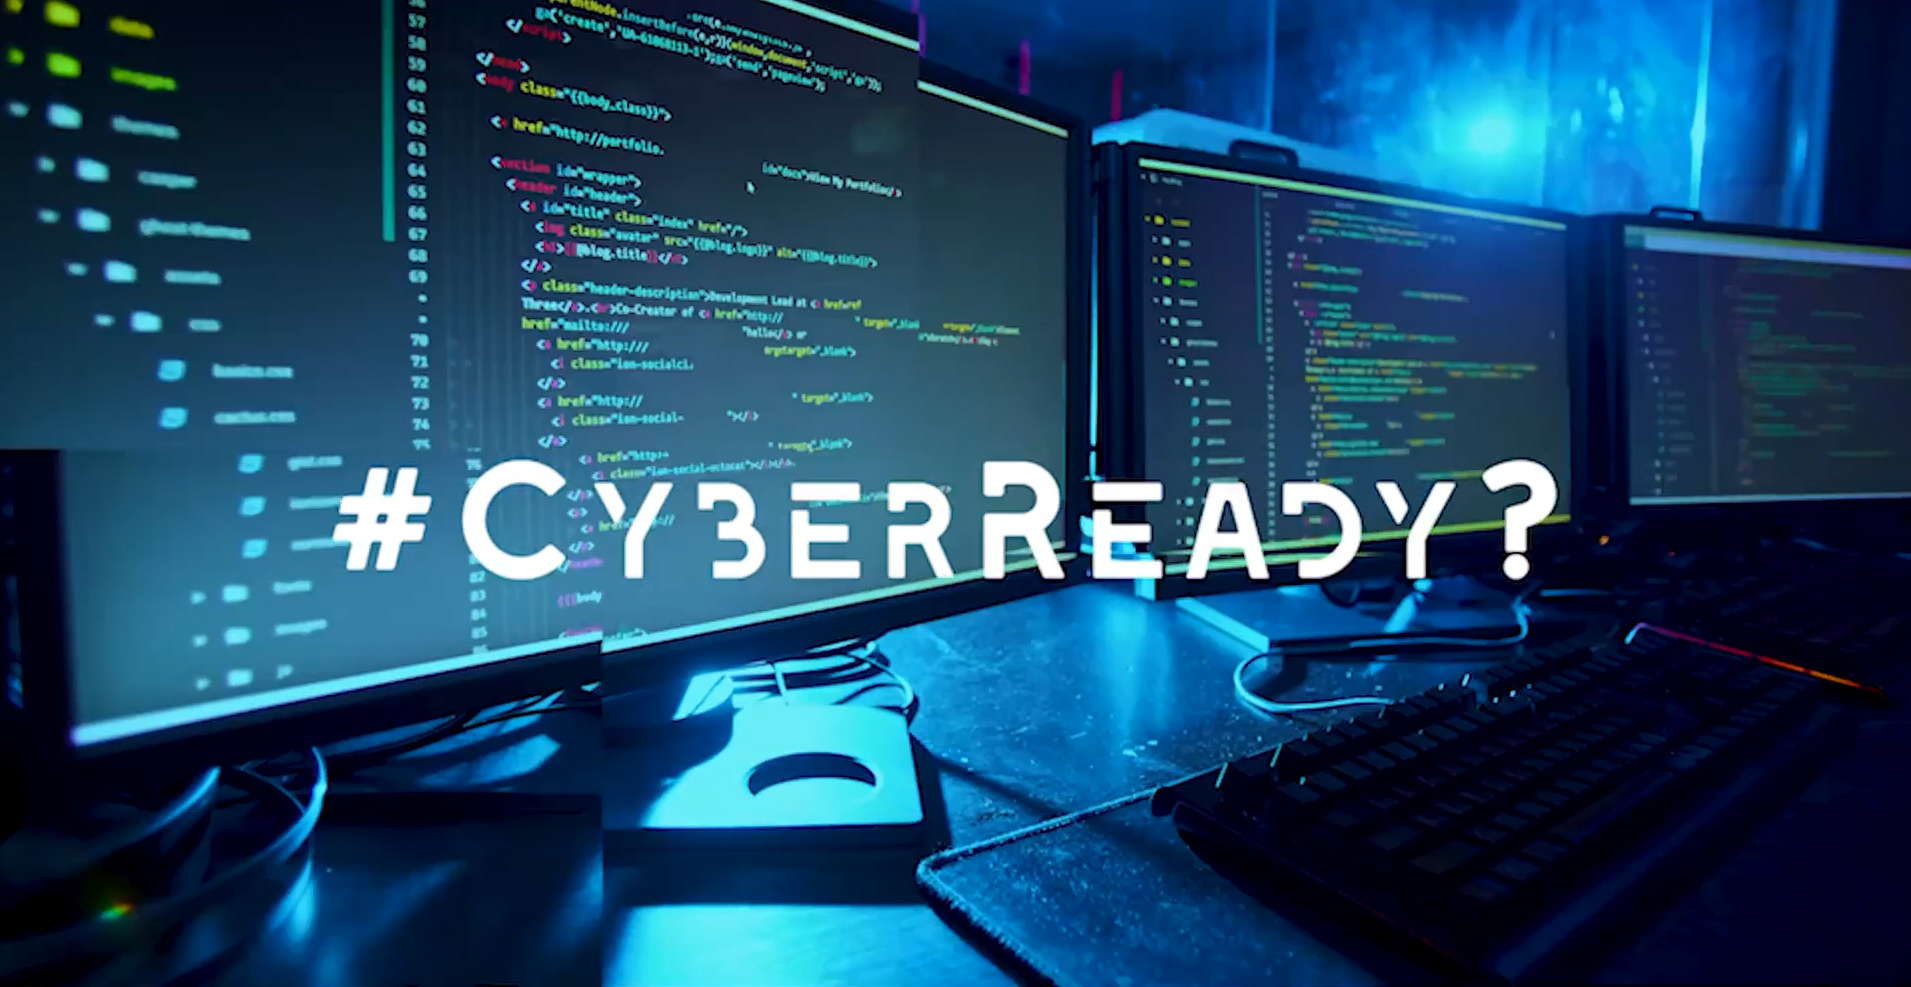 Cyber Ready